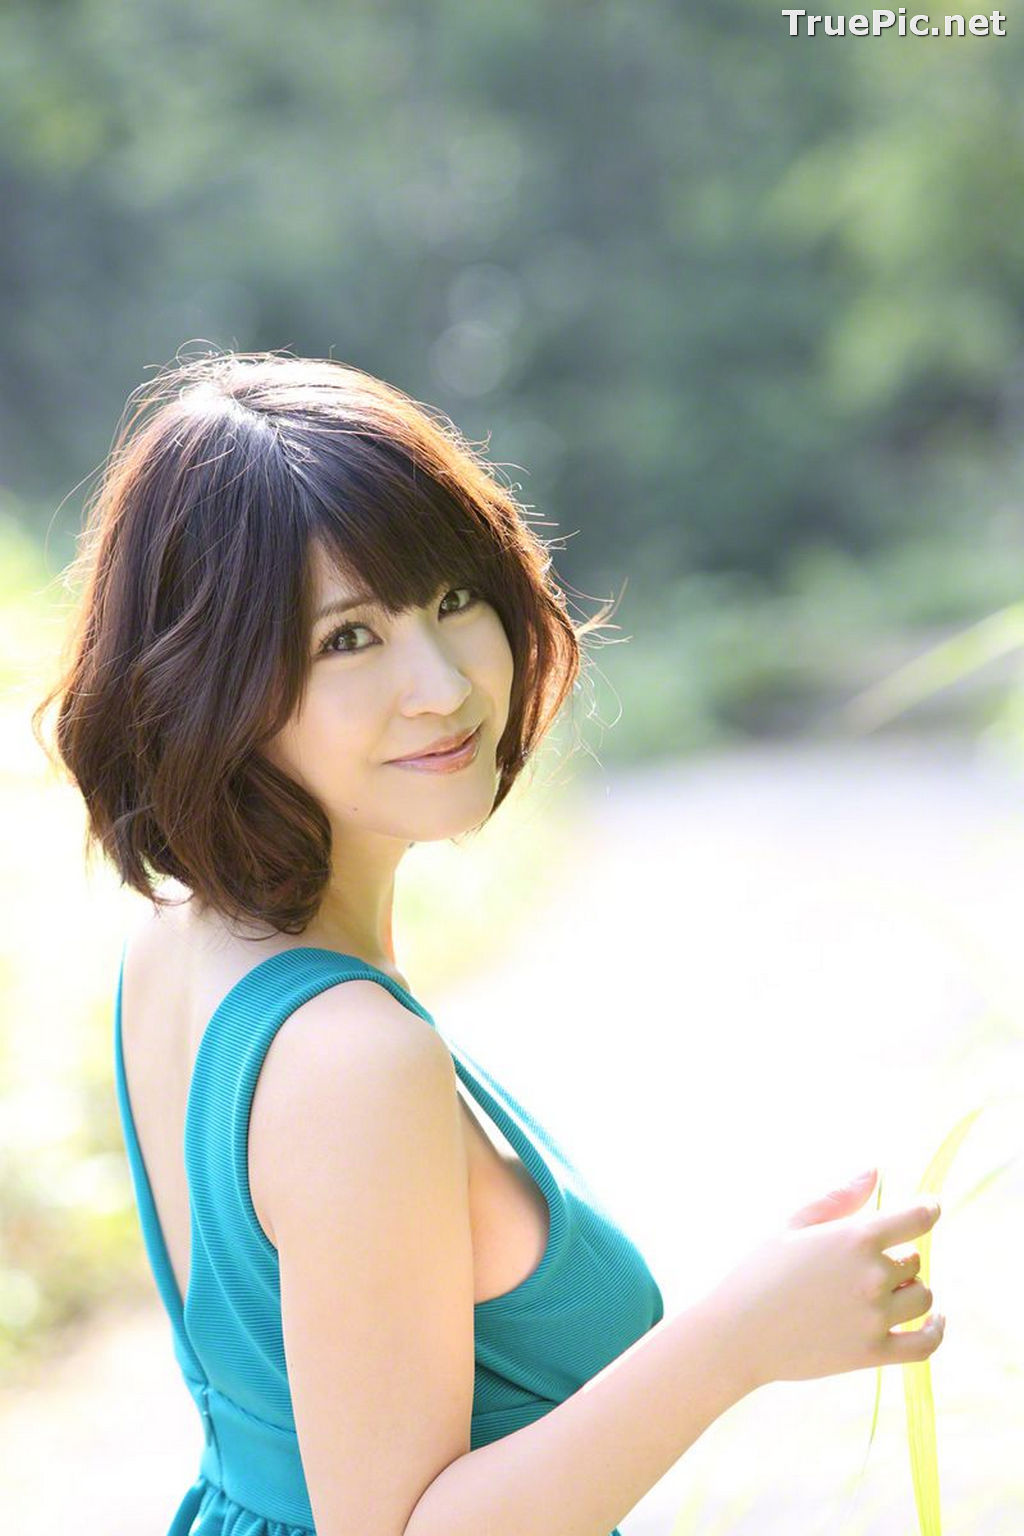 True Pic Wanibooks No 122 Japanese Gravure Idol And Actress Asuka